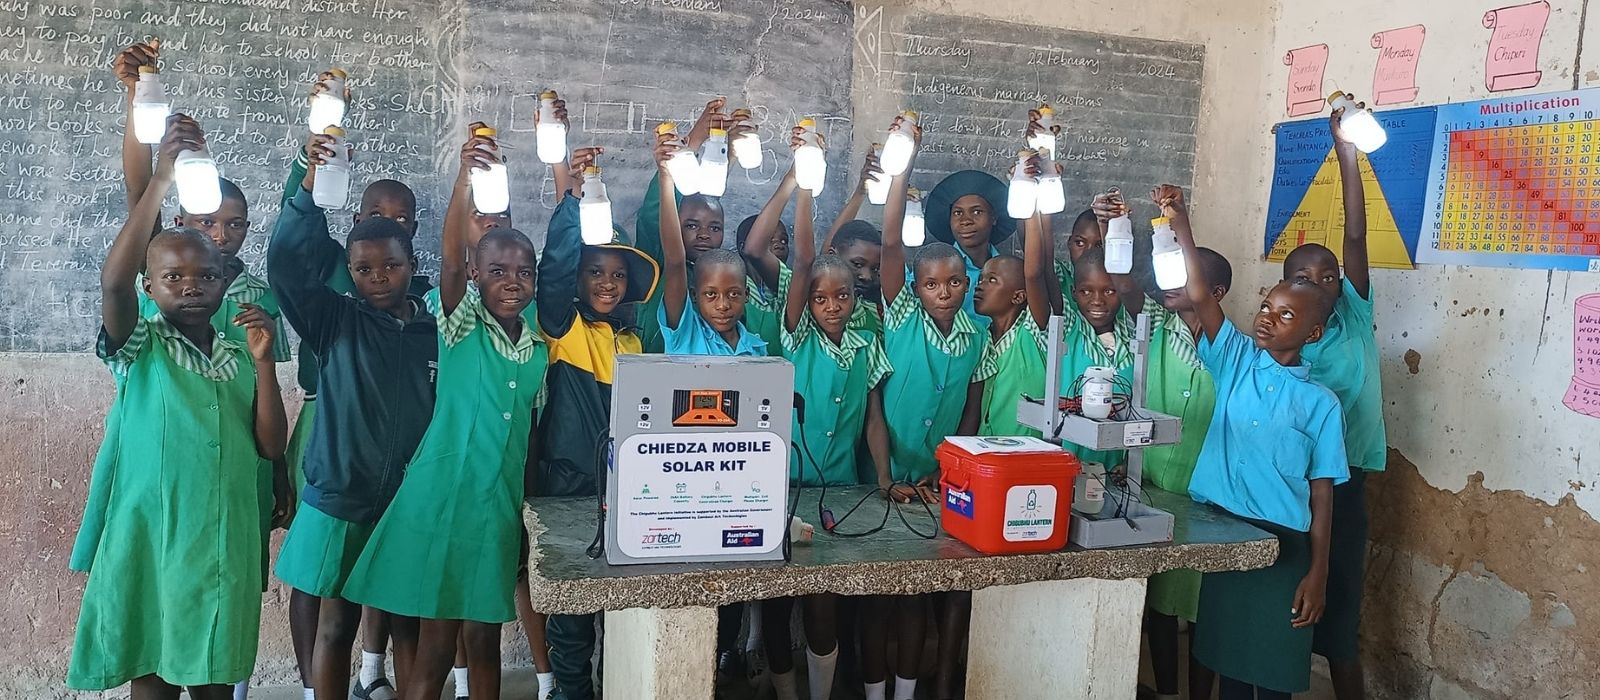 Illuminating Change: How solar power is empowering women across communities